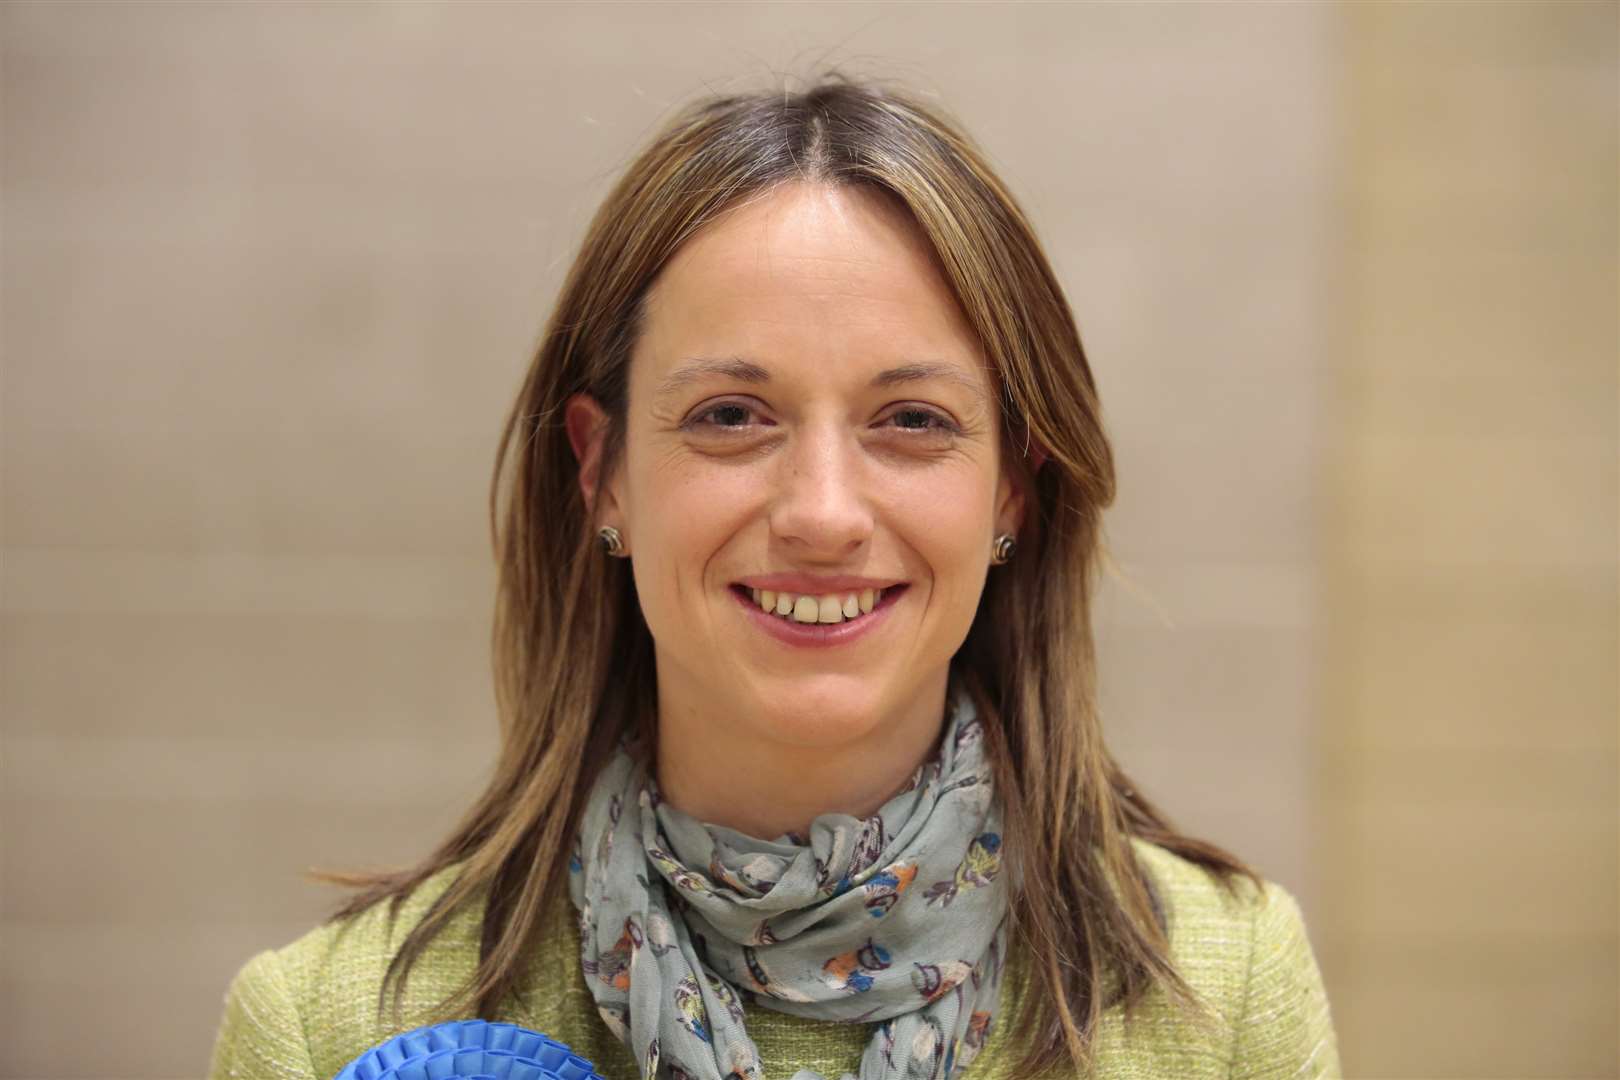 Helen Whatley, MP